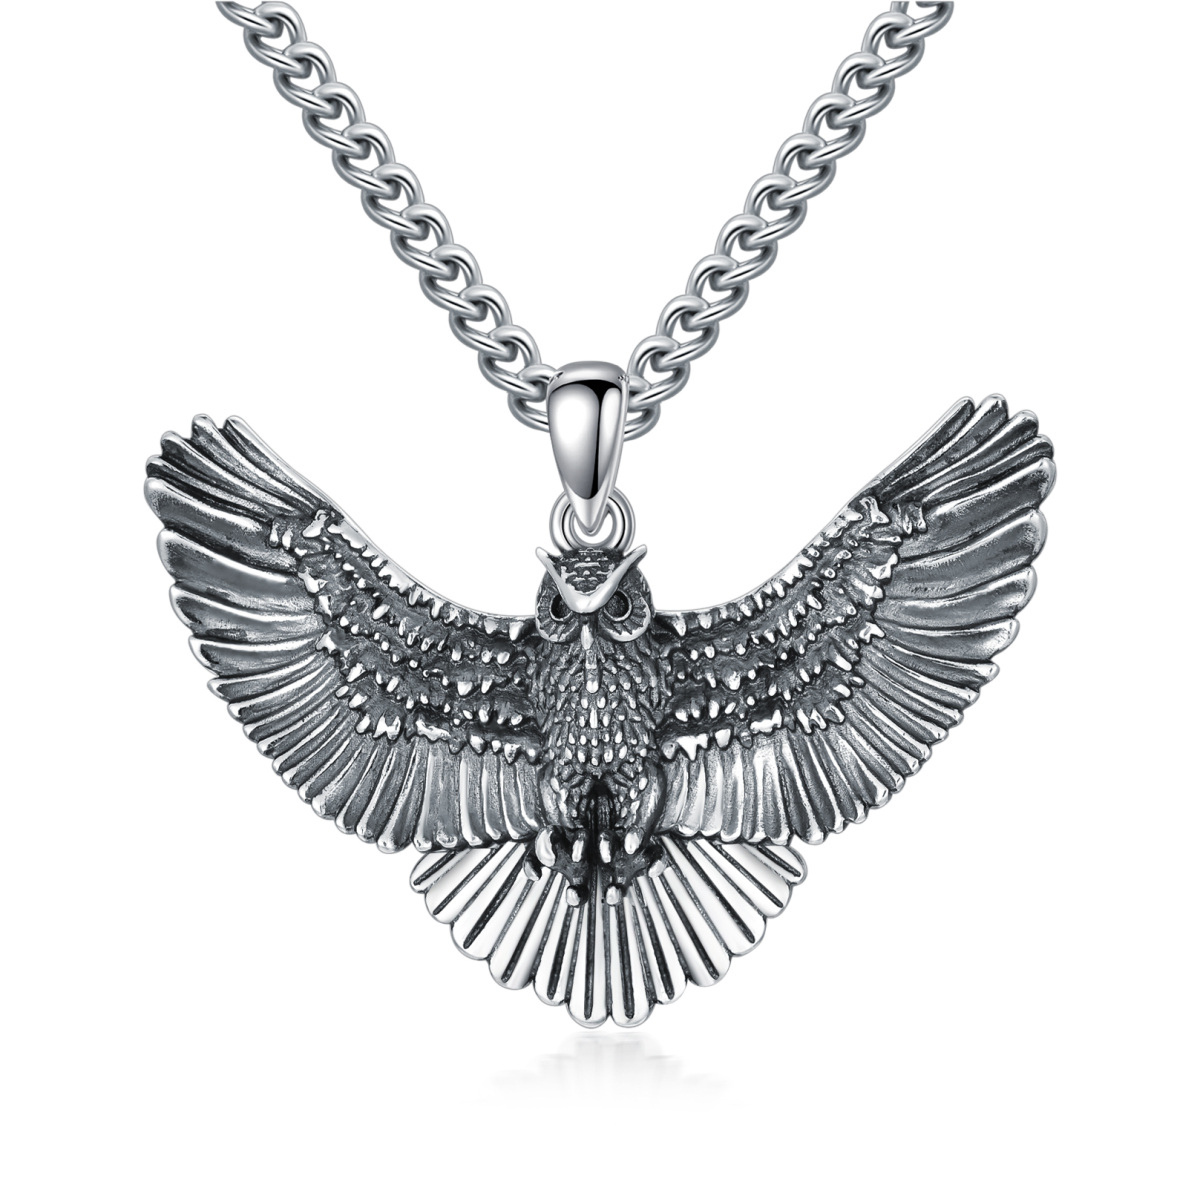 Sterling Silver Owl Pendant Necklace for Men-1